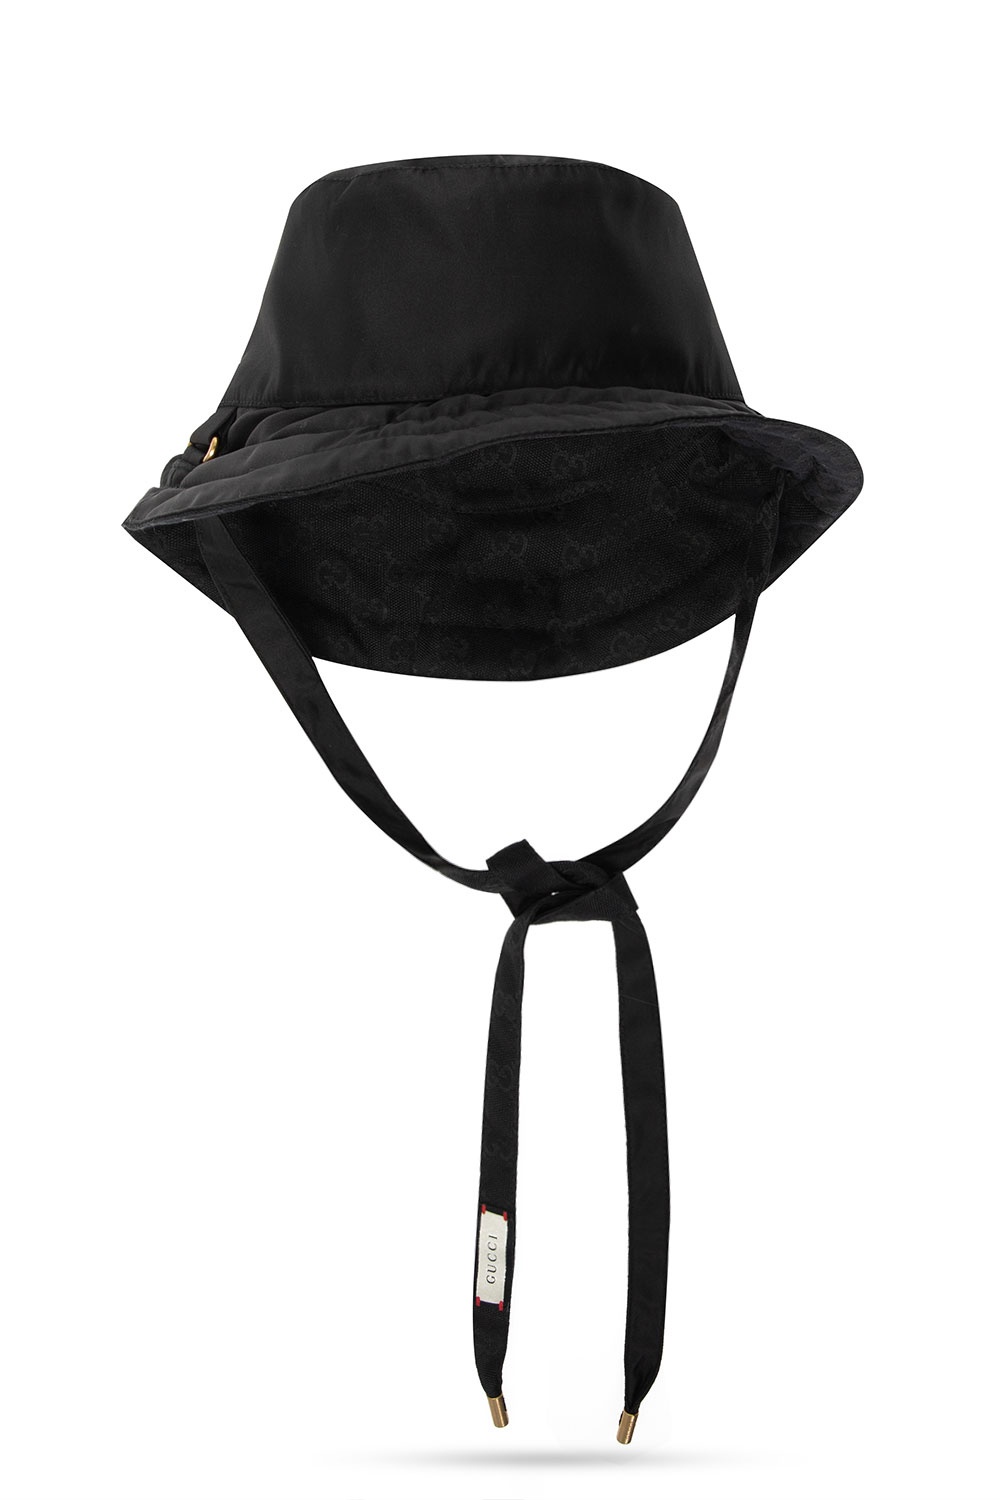 flexfit classic - Gucci logo with Nicaragua profile twill Black low dad hat IetpShops Bucket cap - cotton